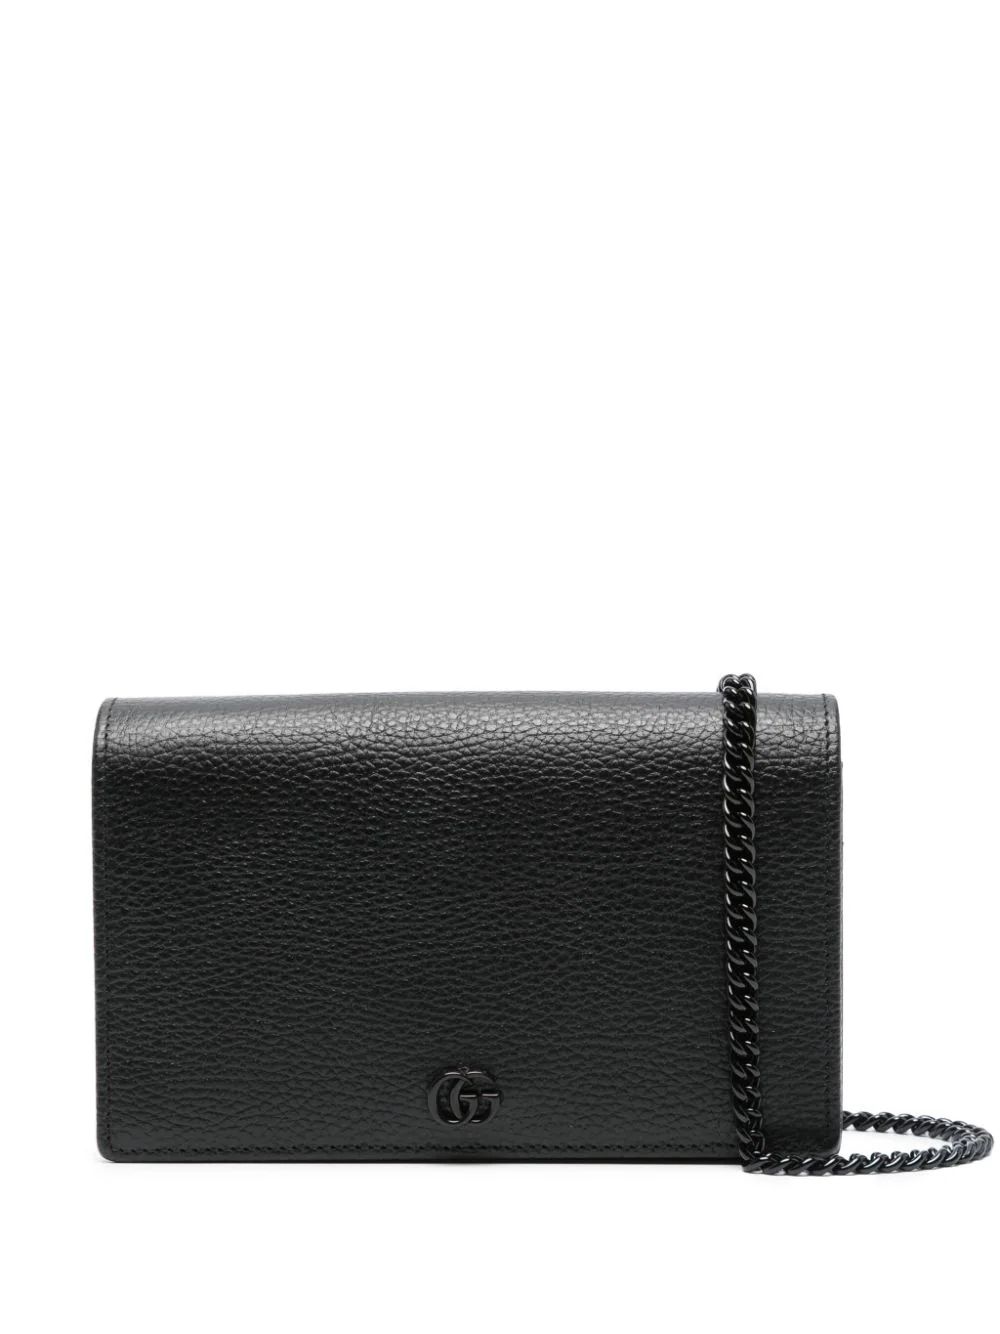 GG Marmont chain wallet | Farfetch Global